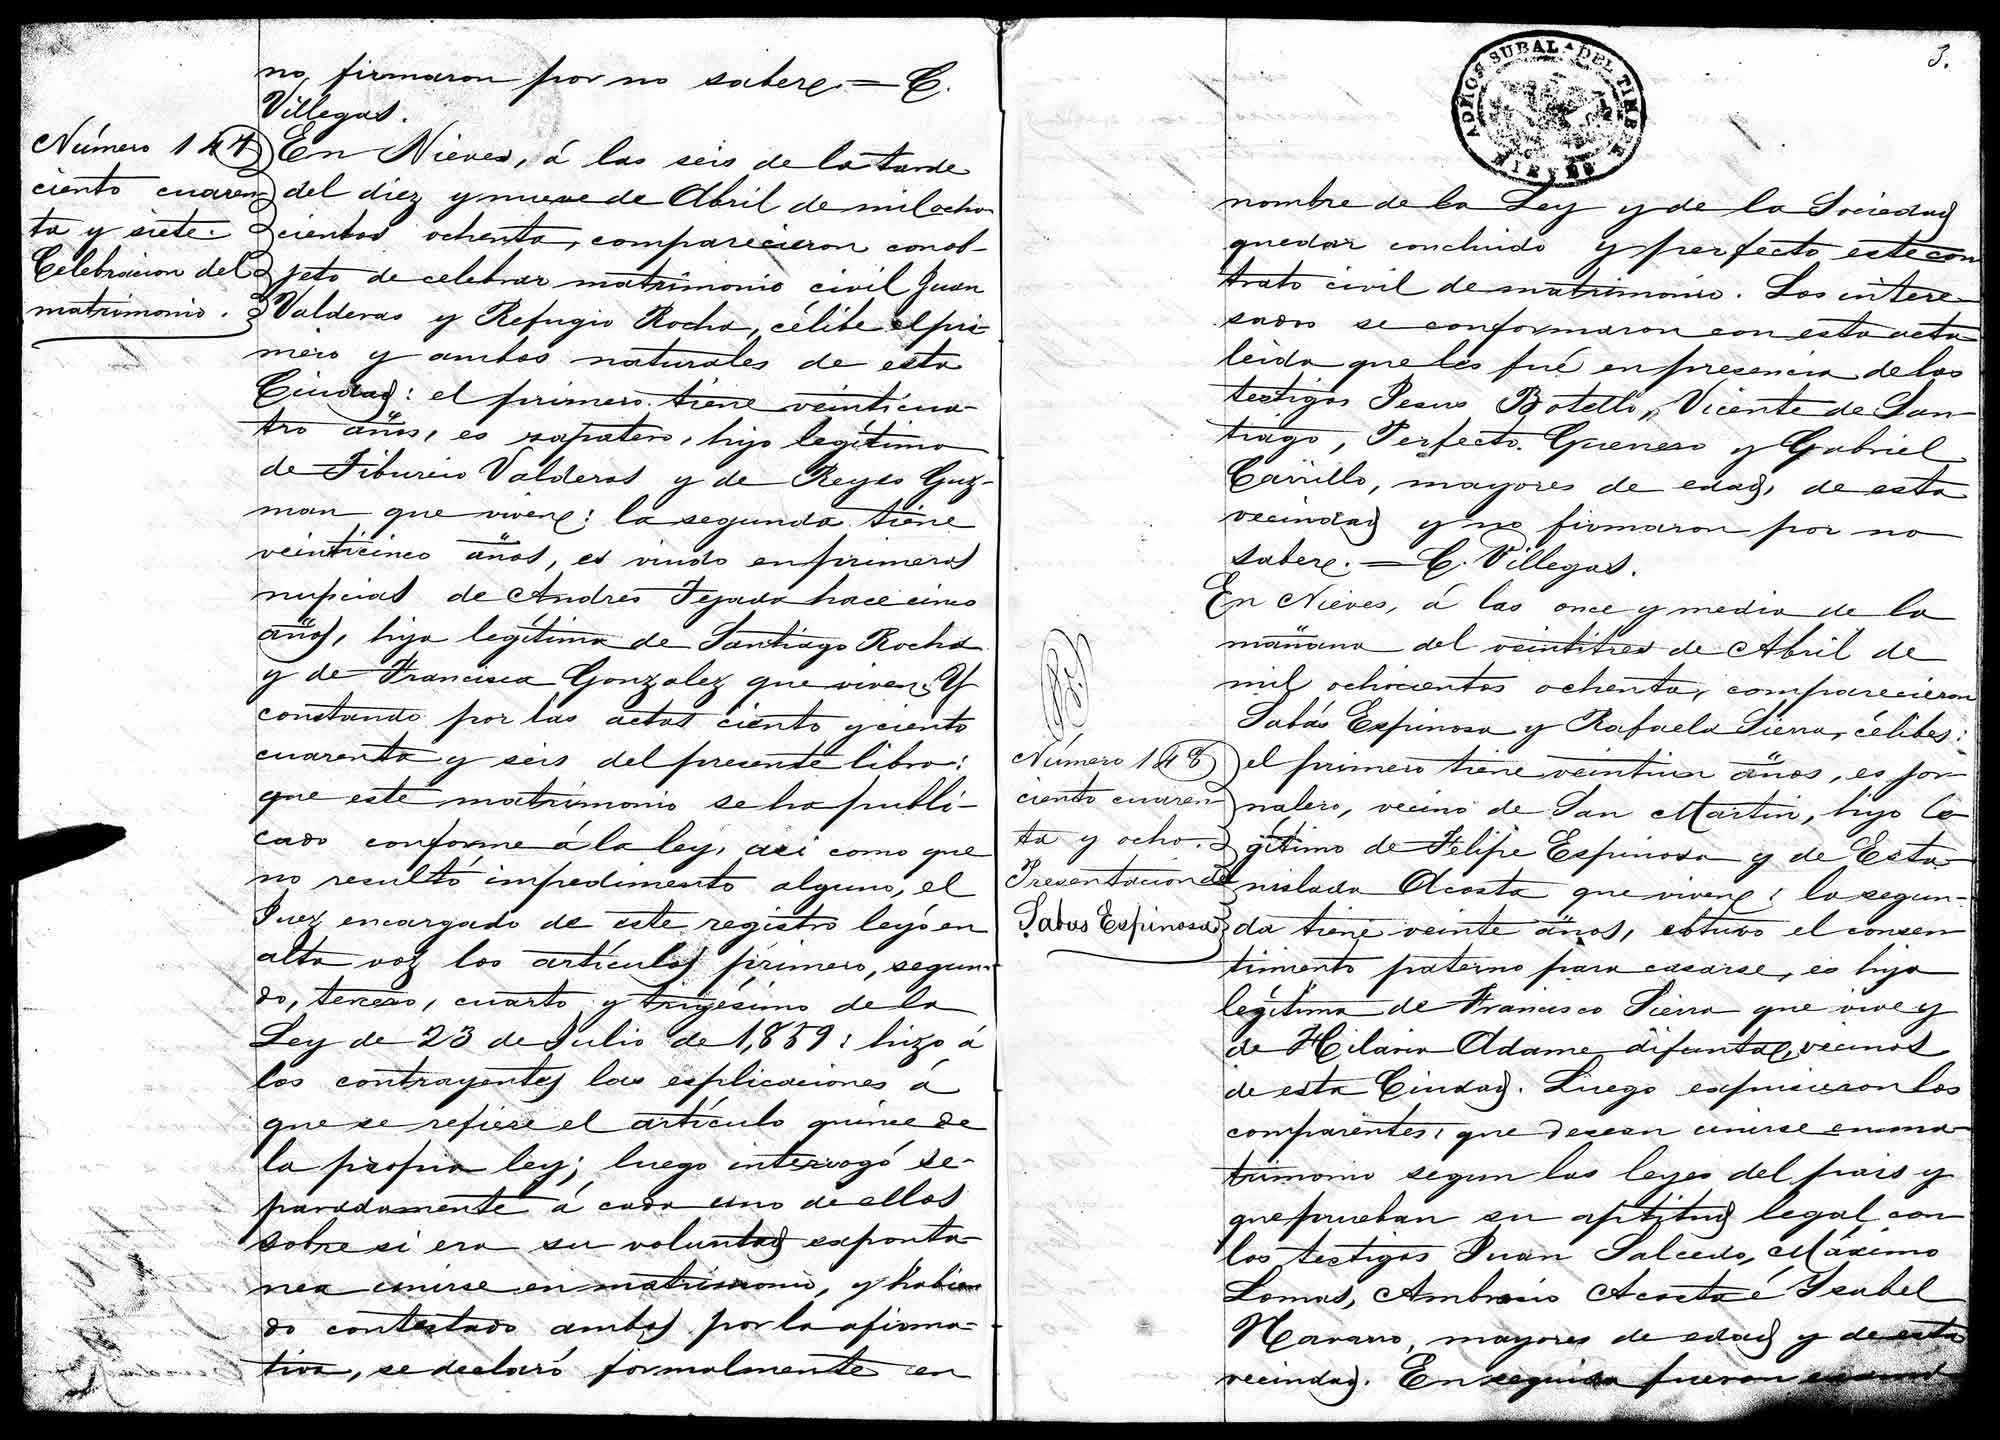 Nieves marriage record for Juan Balderas and Refugio Rocha, #147